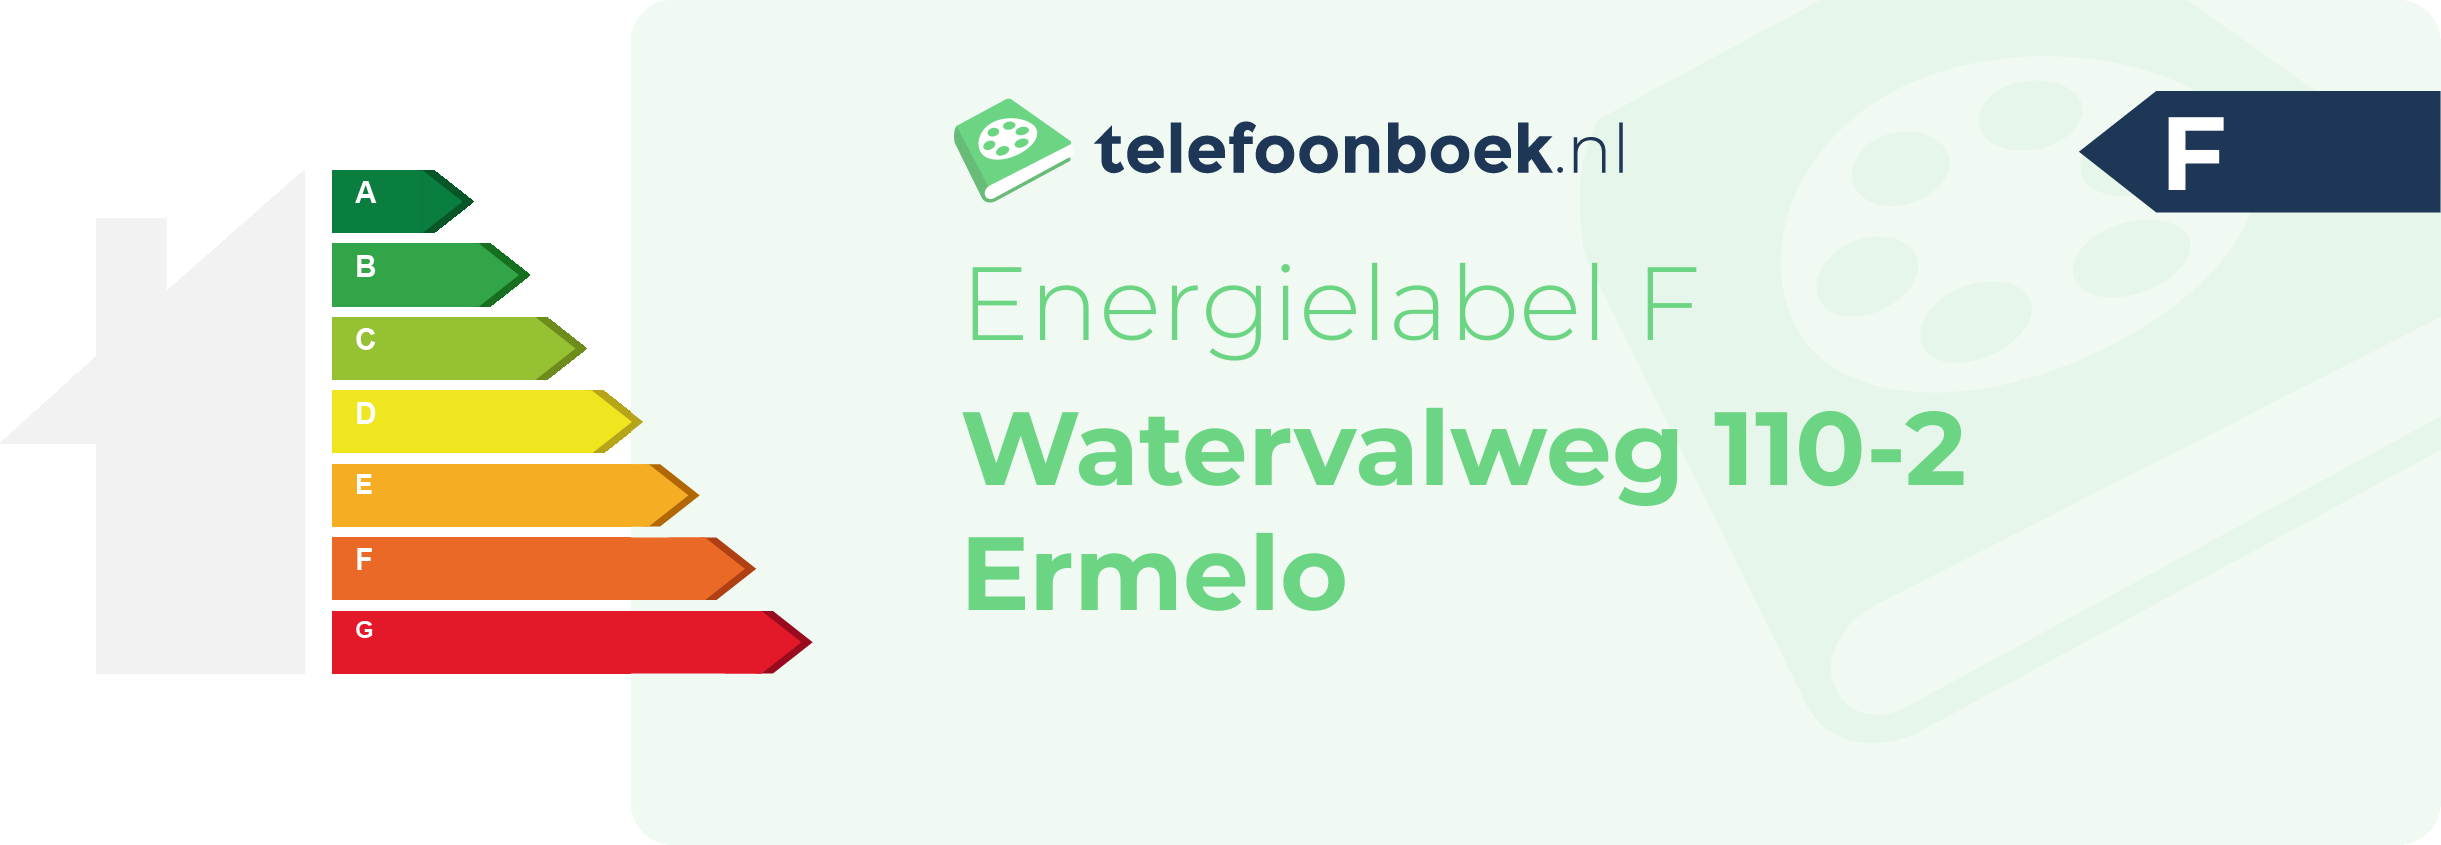 Energielabel Watervalweg 110-2 Ermelo